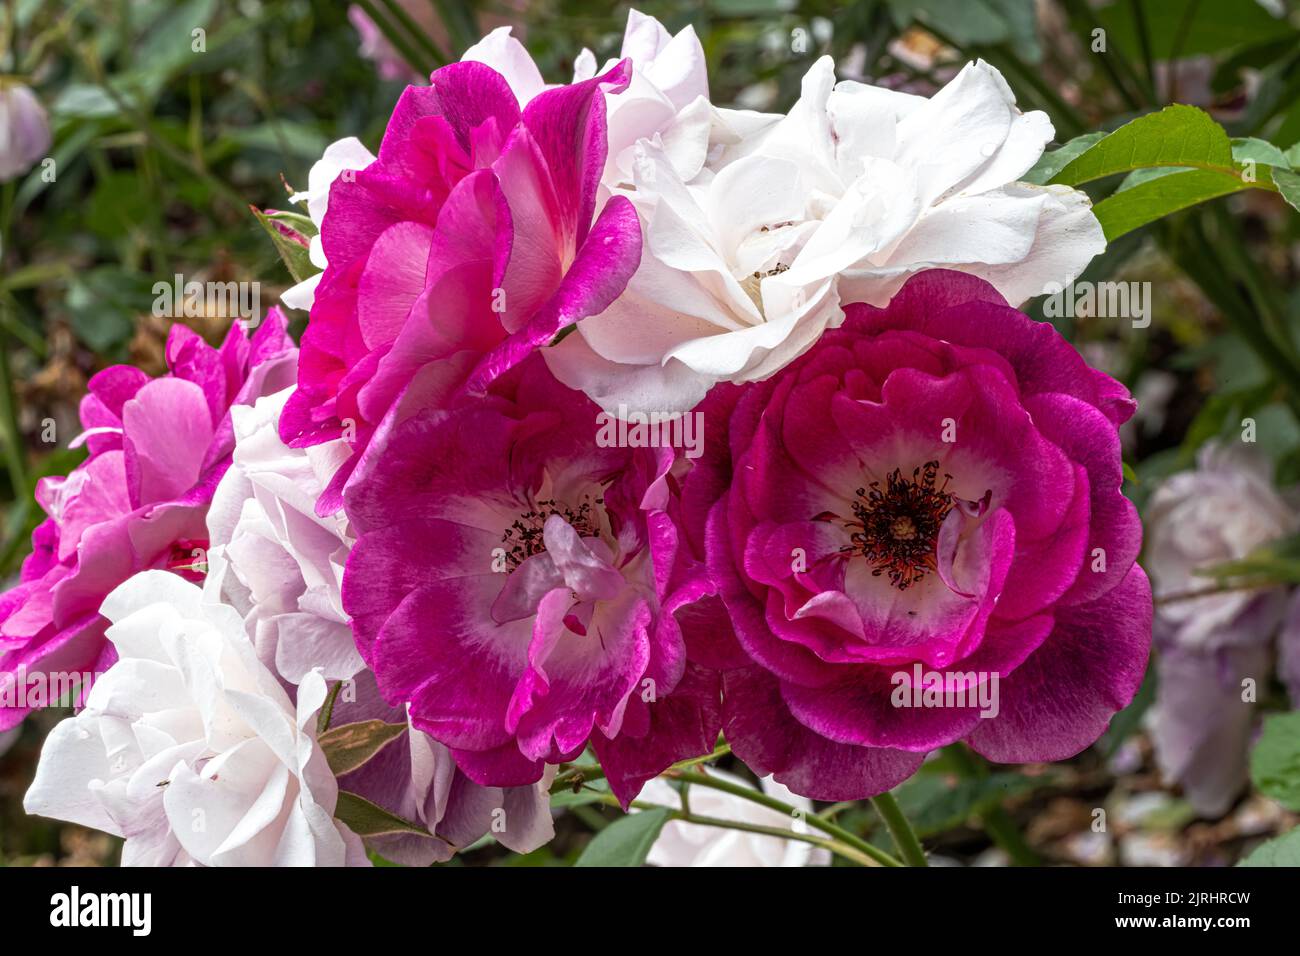 Flowers of ‘Brilliant Pink Iceberg’ Floribunda Rose Stock Photo